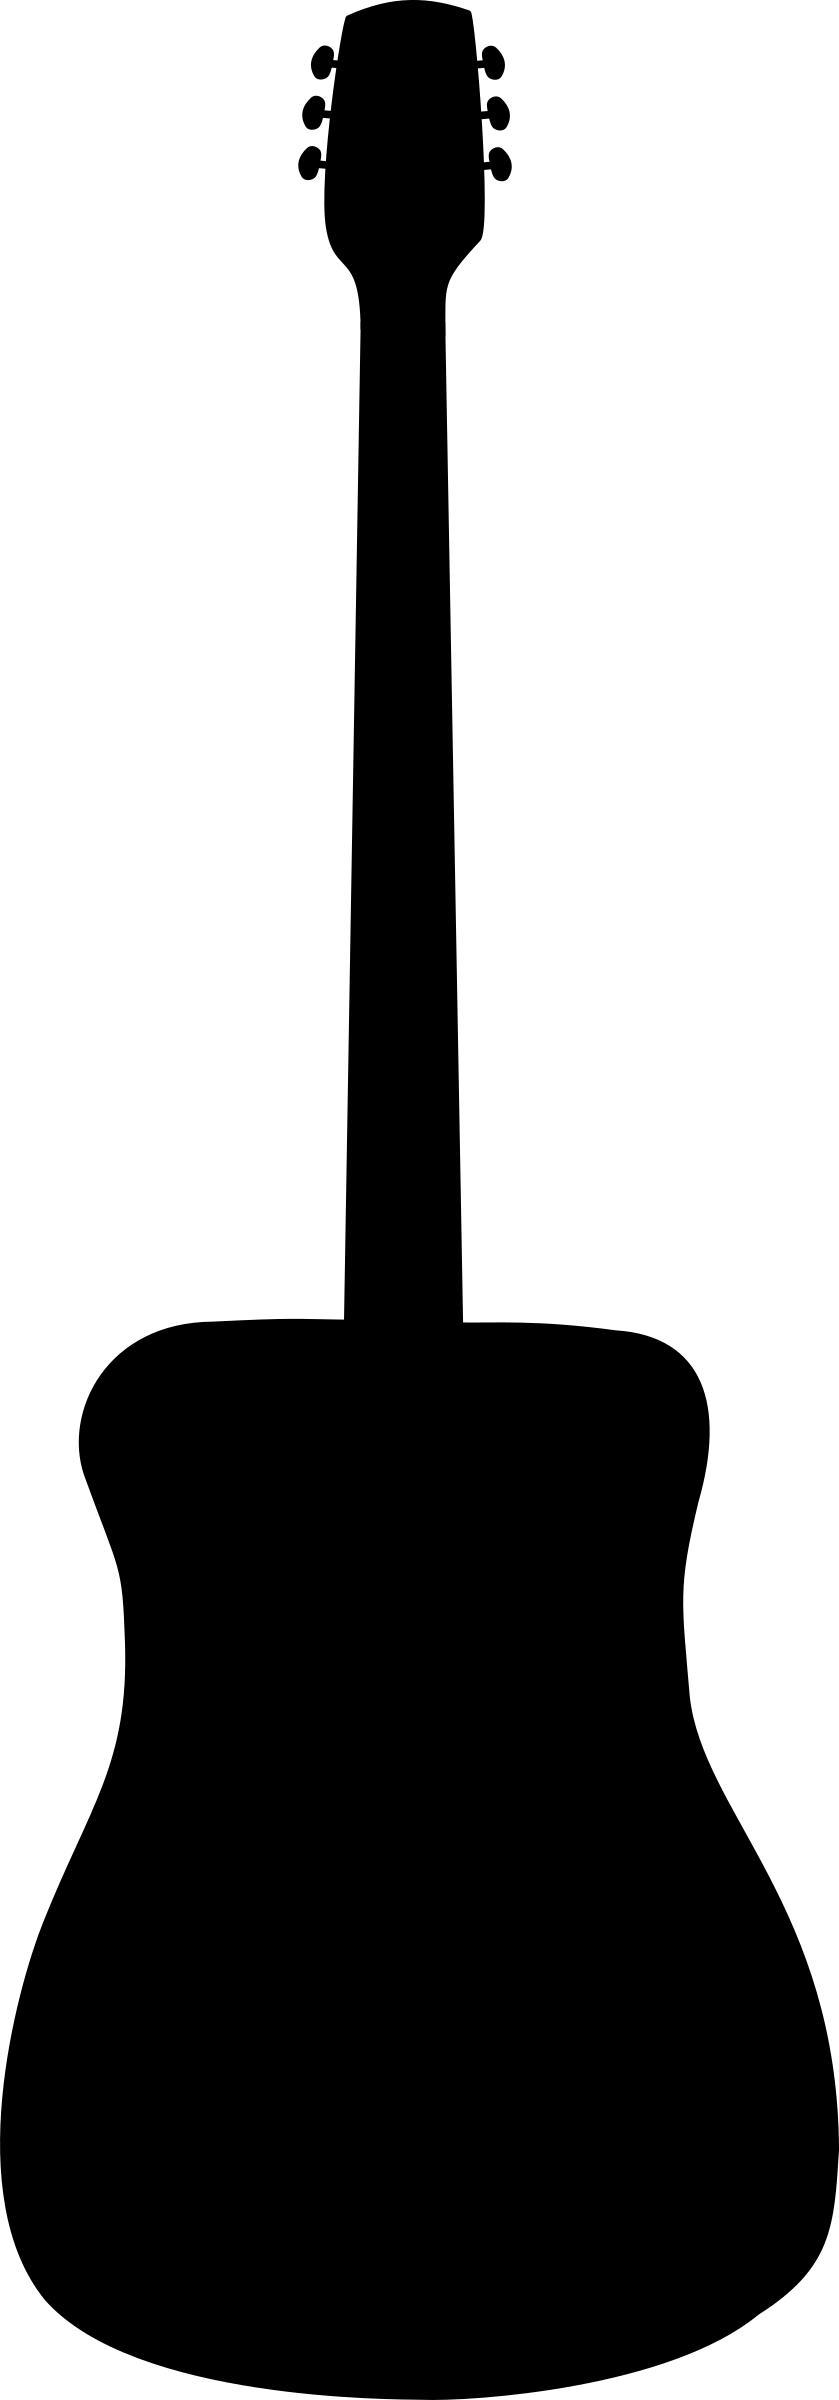 Acoustic guitar silhouette png transparent